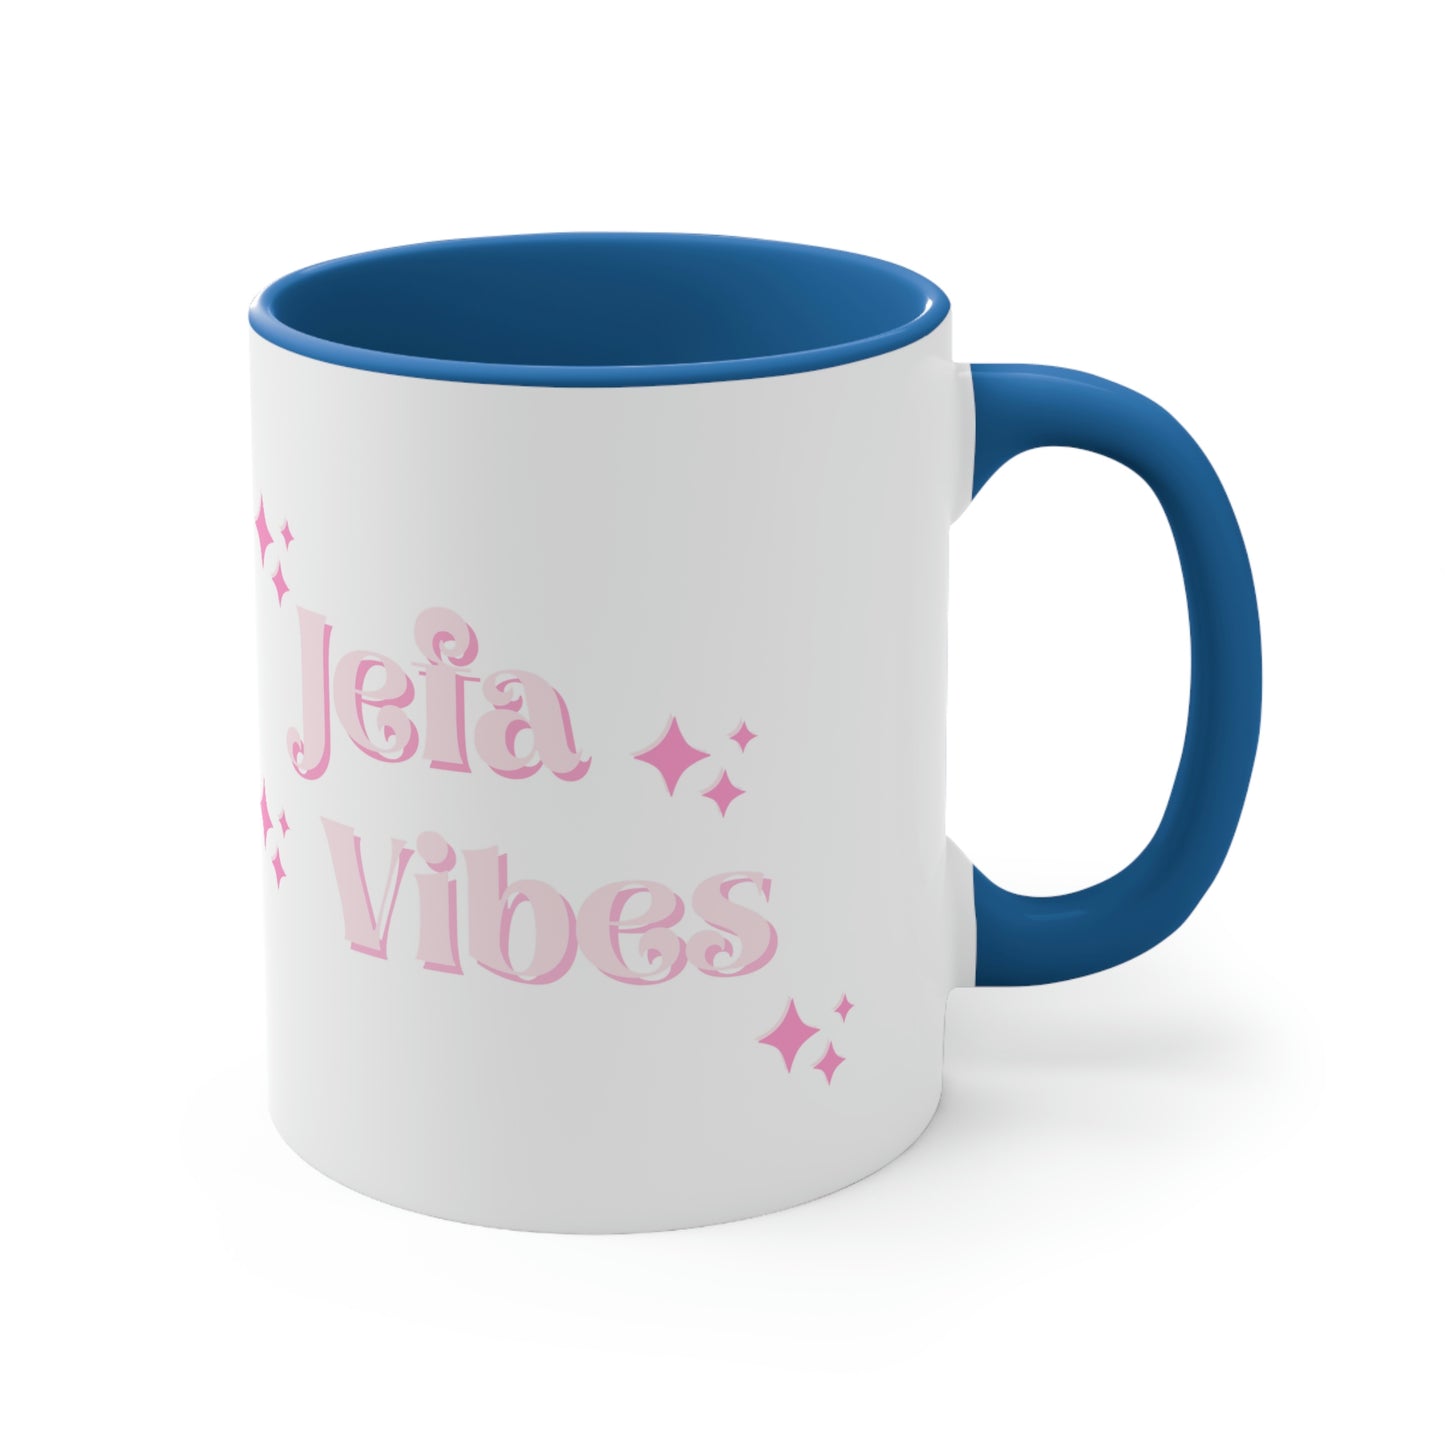 Latina Coffee Mug, Spanish Mom Mug, Funny Coffee Mug, Spanish Coffee Mug, Hispanic Gift, Latinx Gift, Jefa Mug, Jefa Vibes, Boss Mug